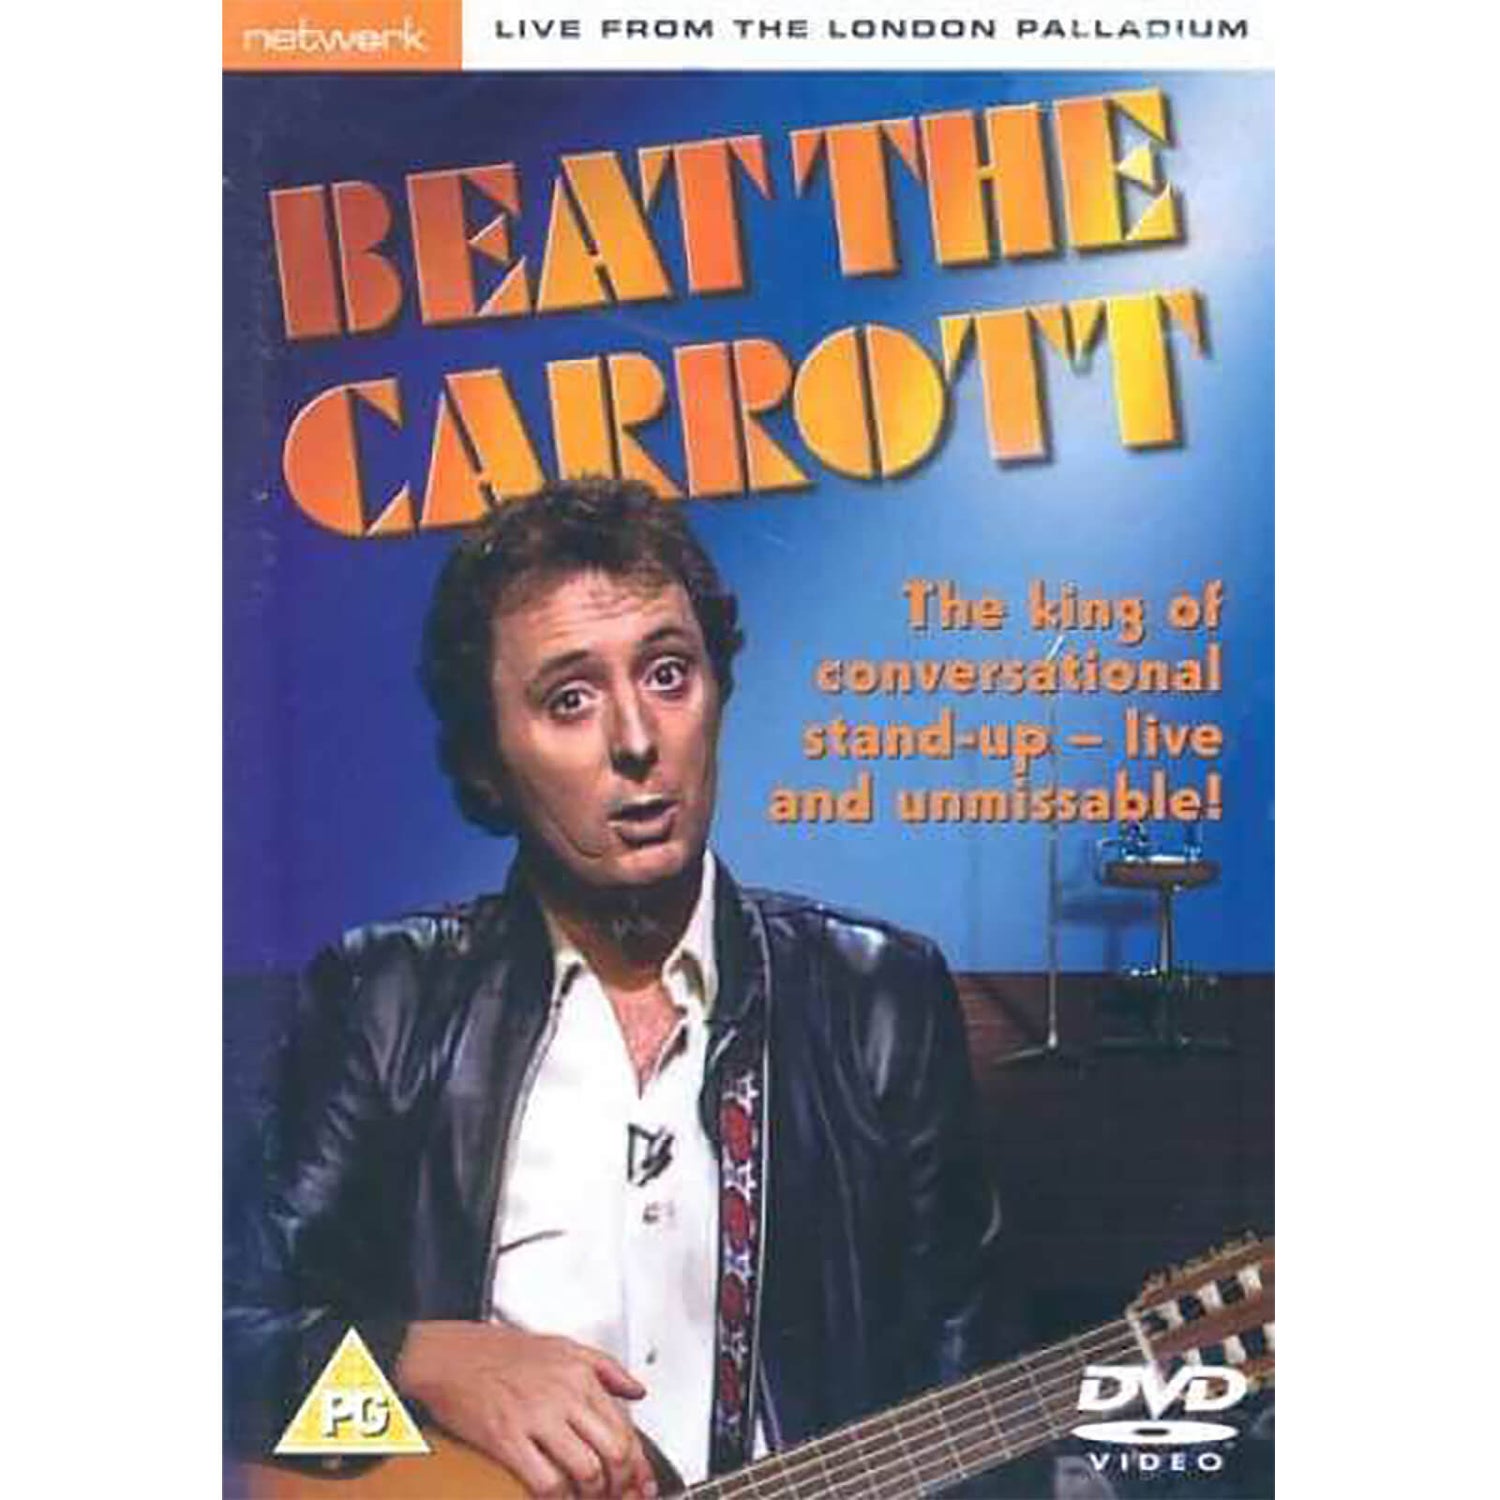 Beat The Carrott - Live From The London Palladium